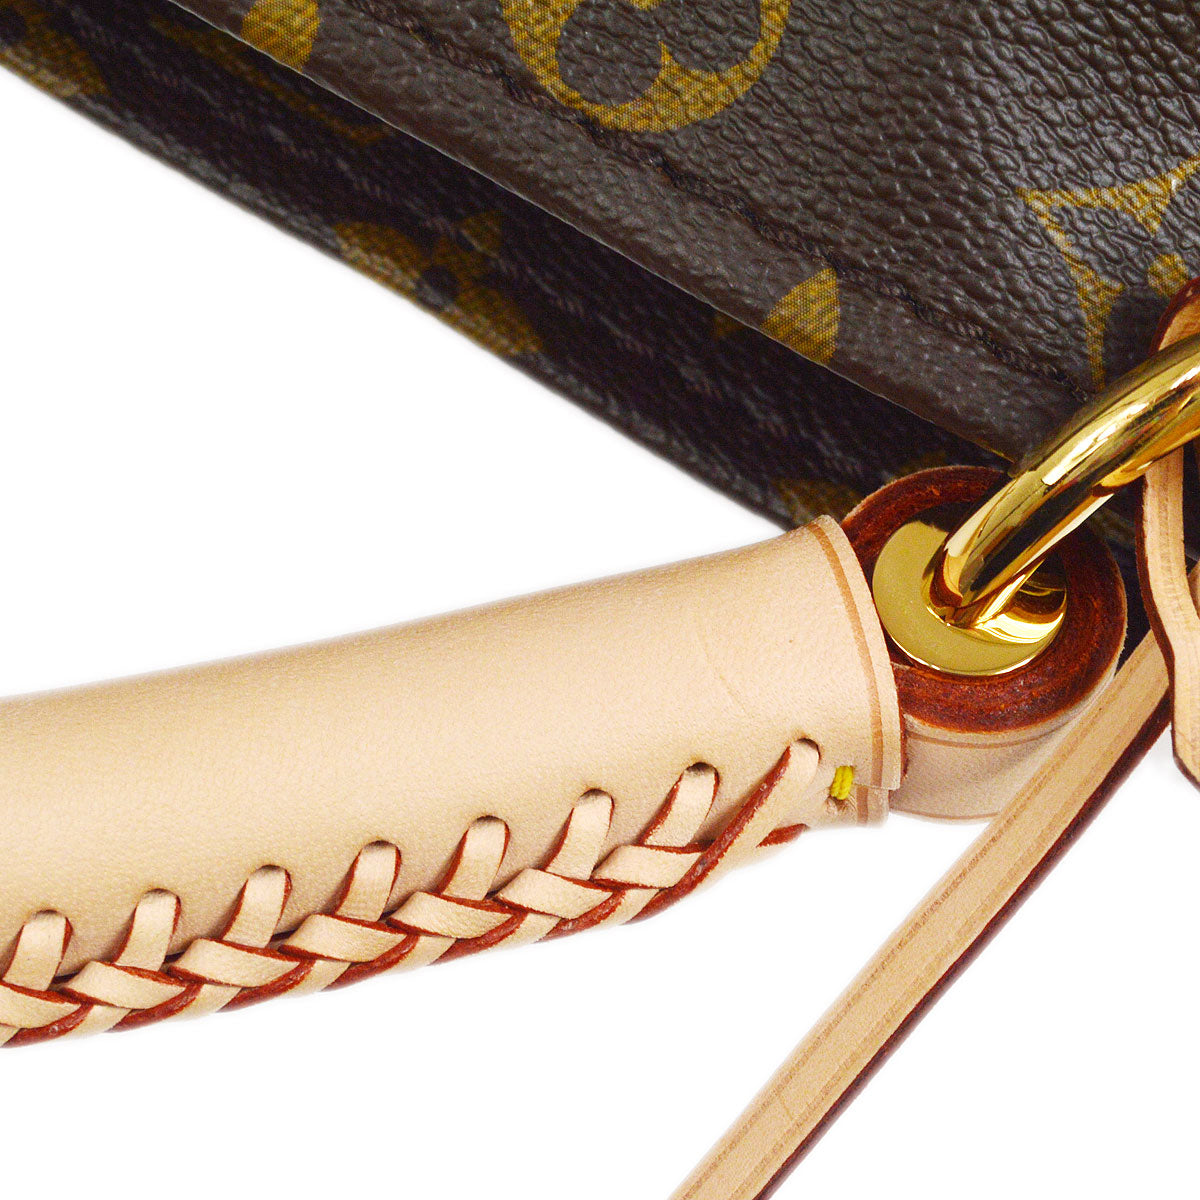 Louis+Vuitton+Artsy+Shoulder+Bag+MM+Black+Leather for sale online